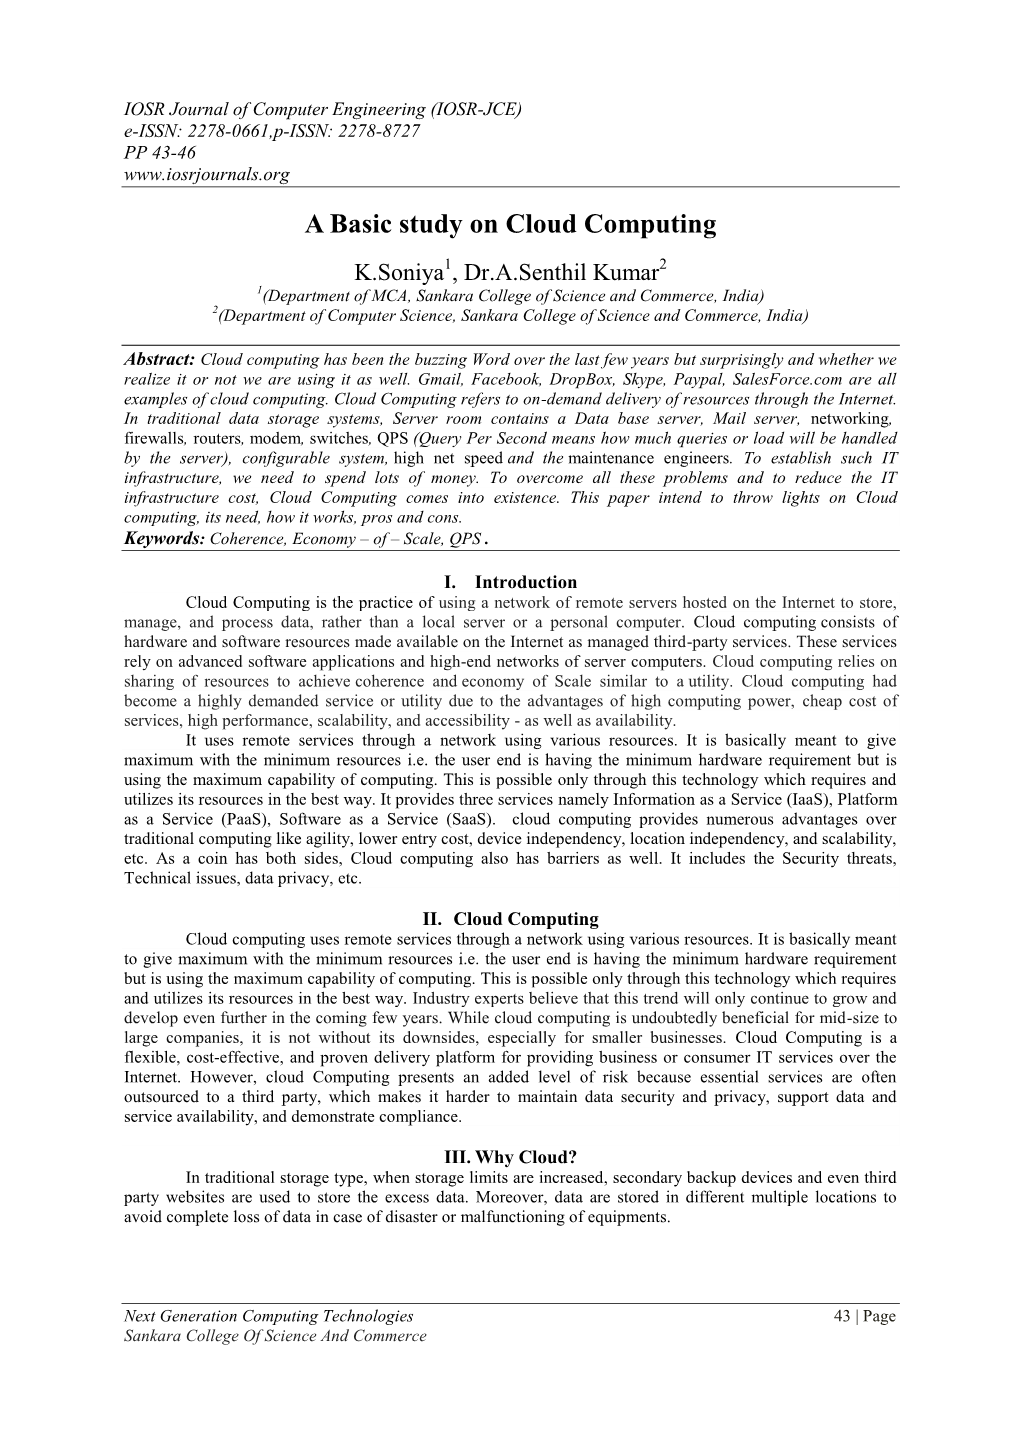 A Basic Study on Cloud Computing